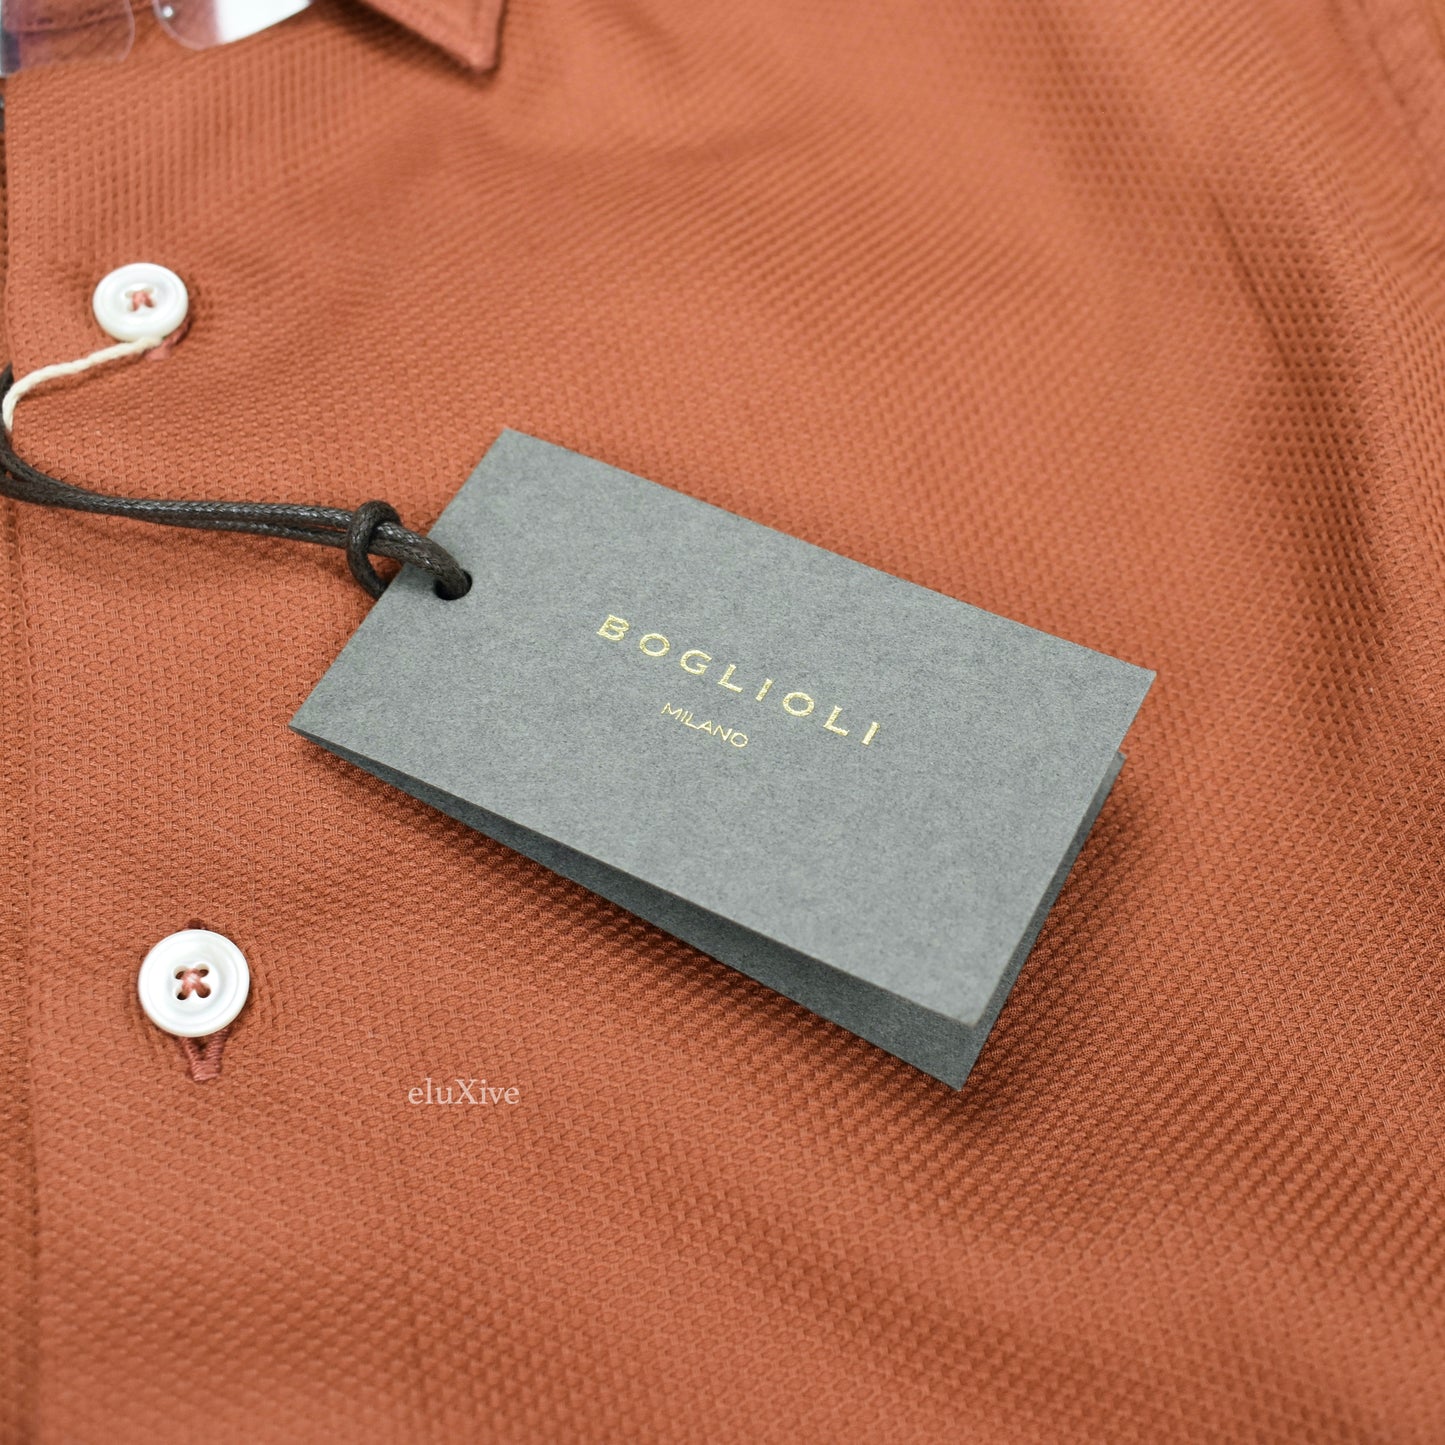 Boglioli - Rust Orange Birdseye Woven Cotton Button Down Shirt